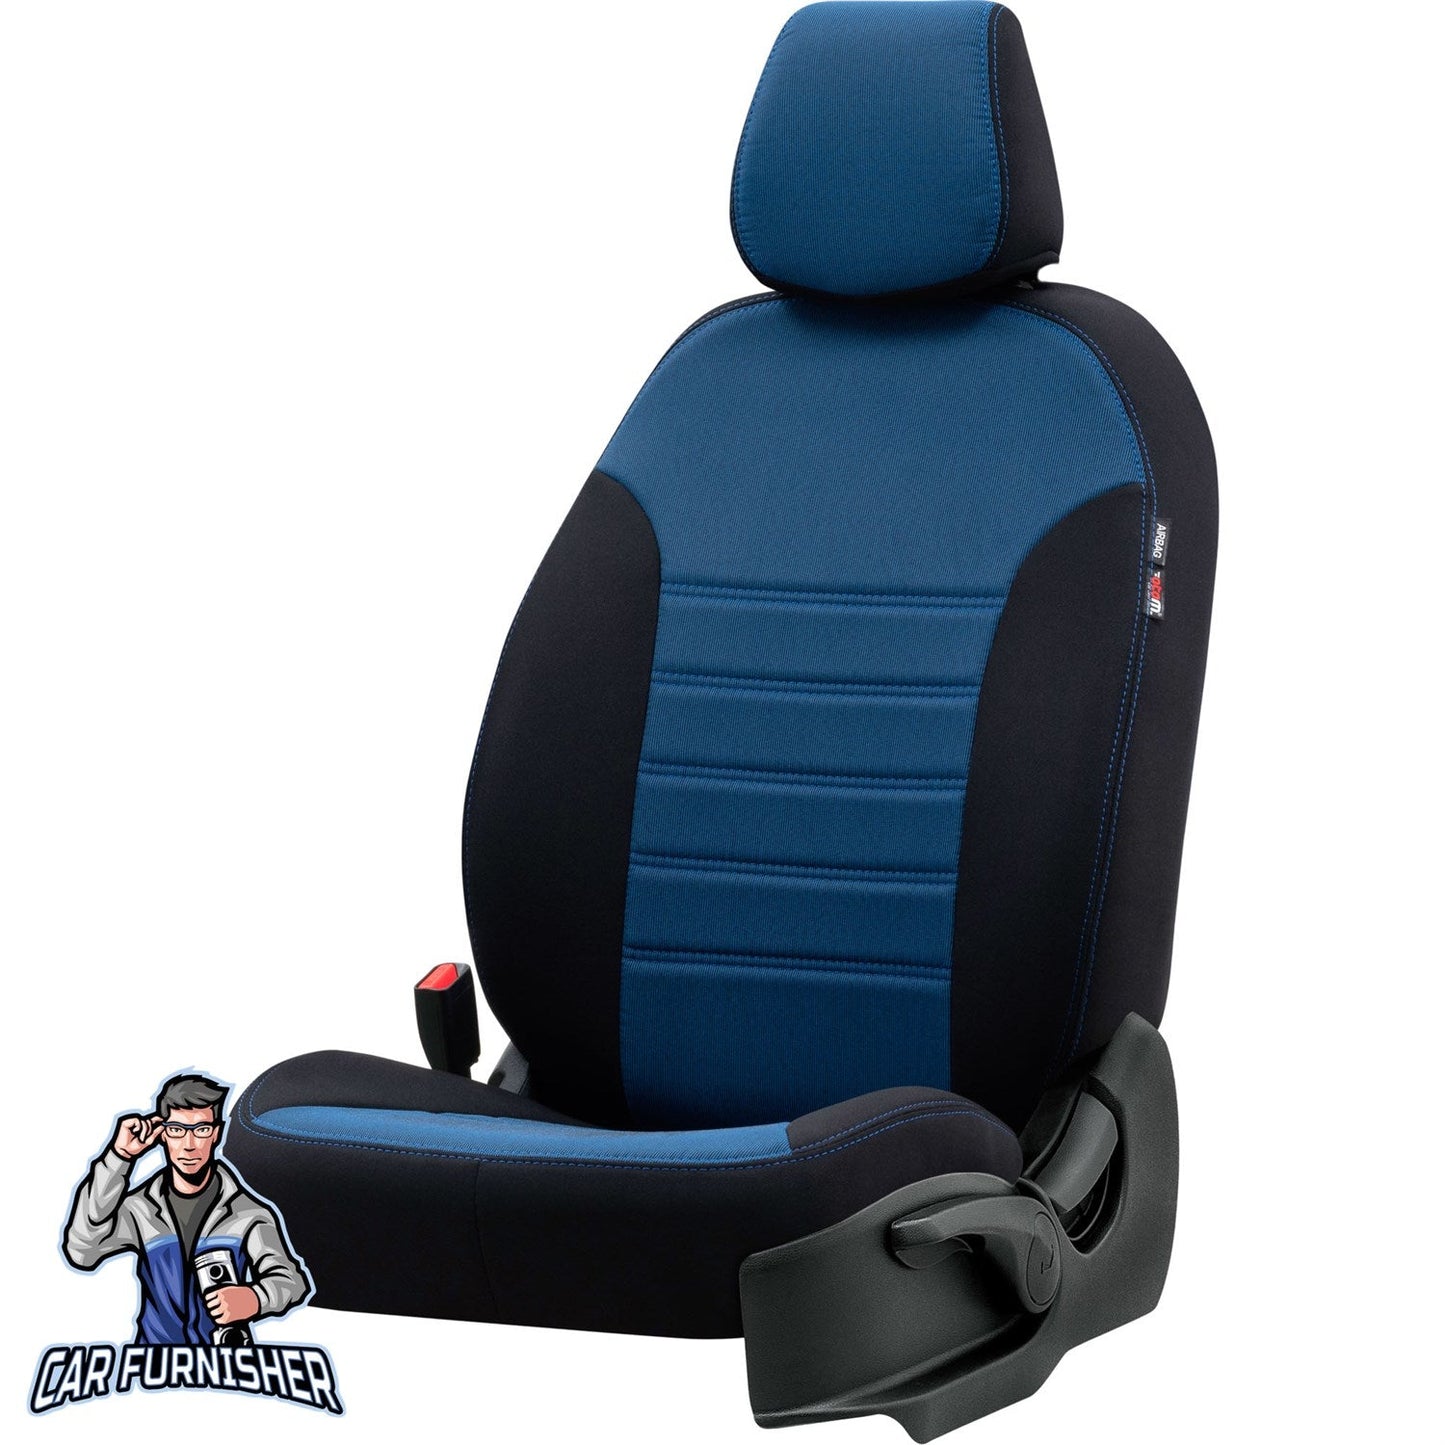 Volkswagen Scirocco Seat Cover Original Jacquard Design Blue Jacquard Fabric